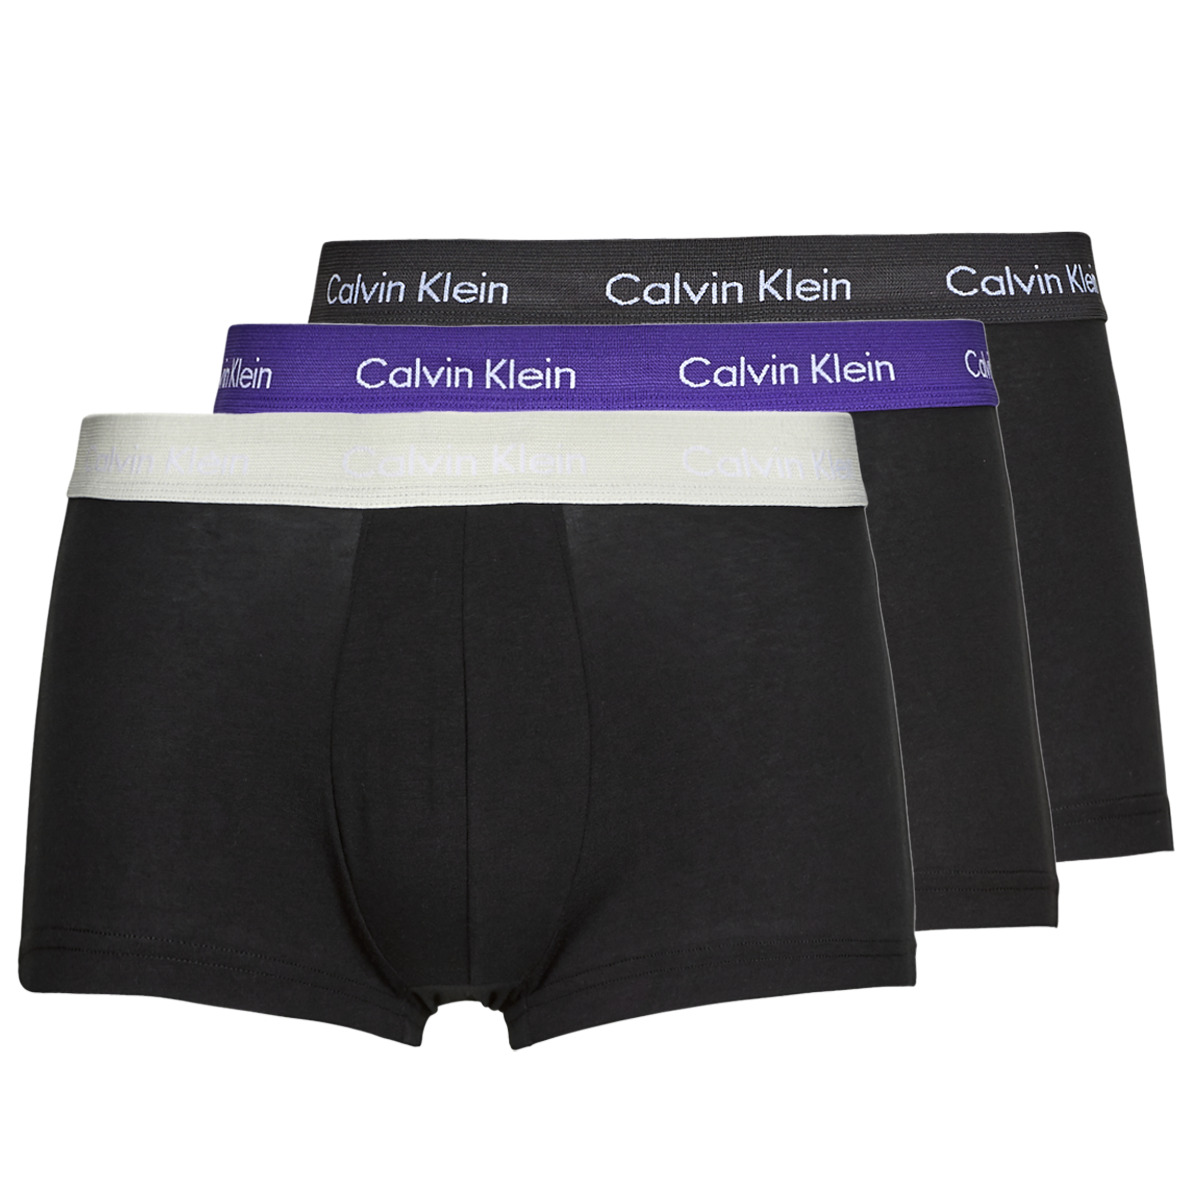 Calvin Klein Jeans Noir LOW RISE TRUNK X3 9yiYSQny